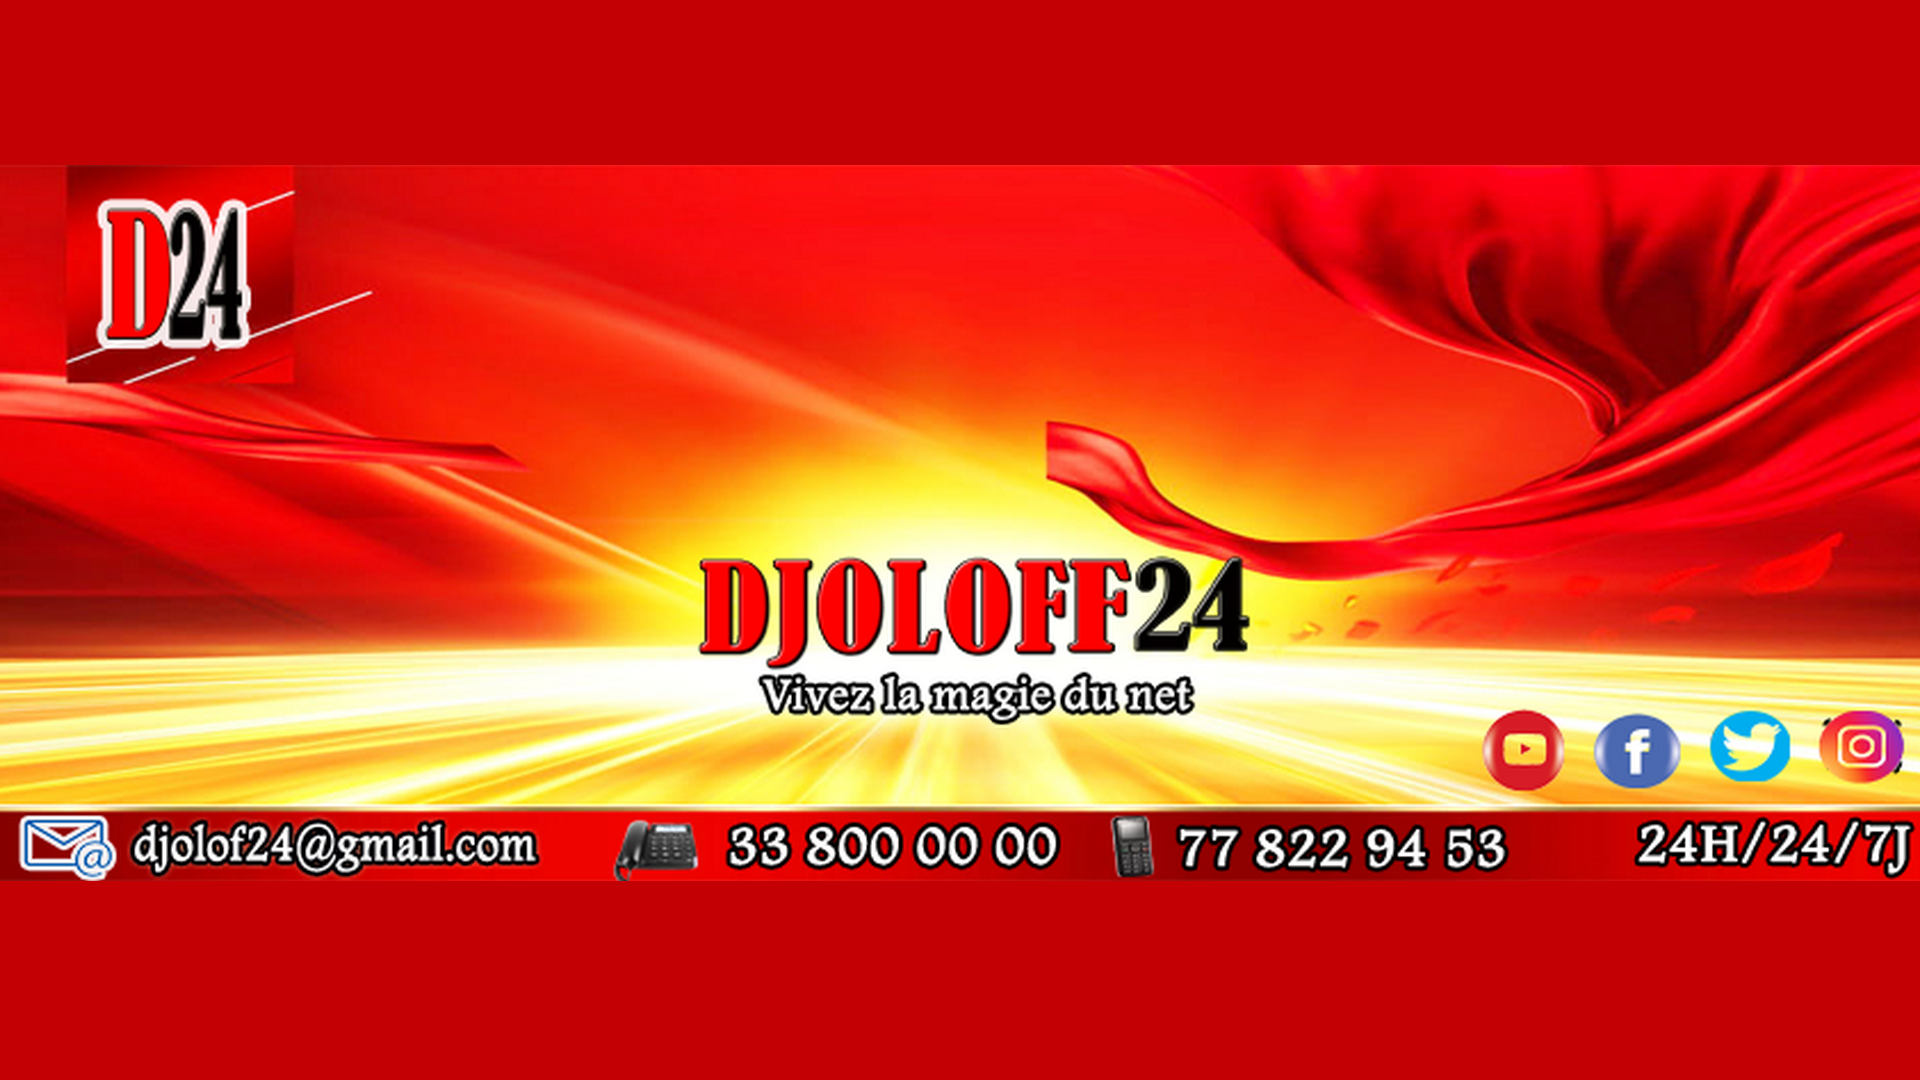 Djoloff 24